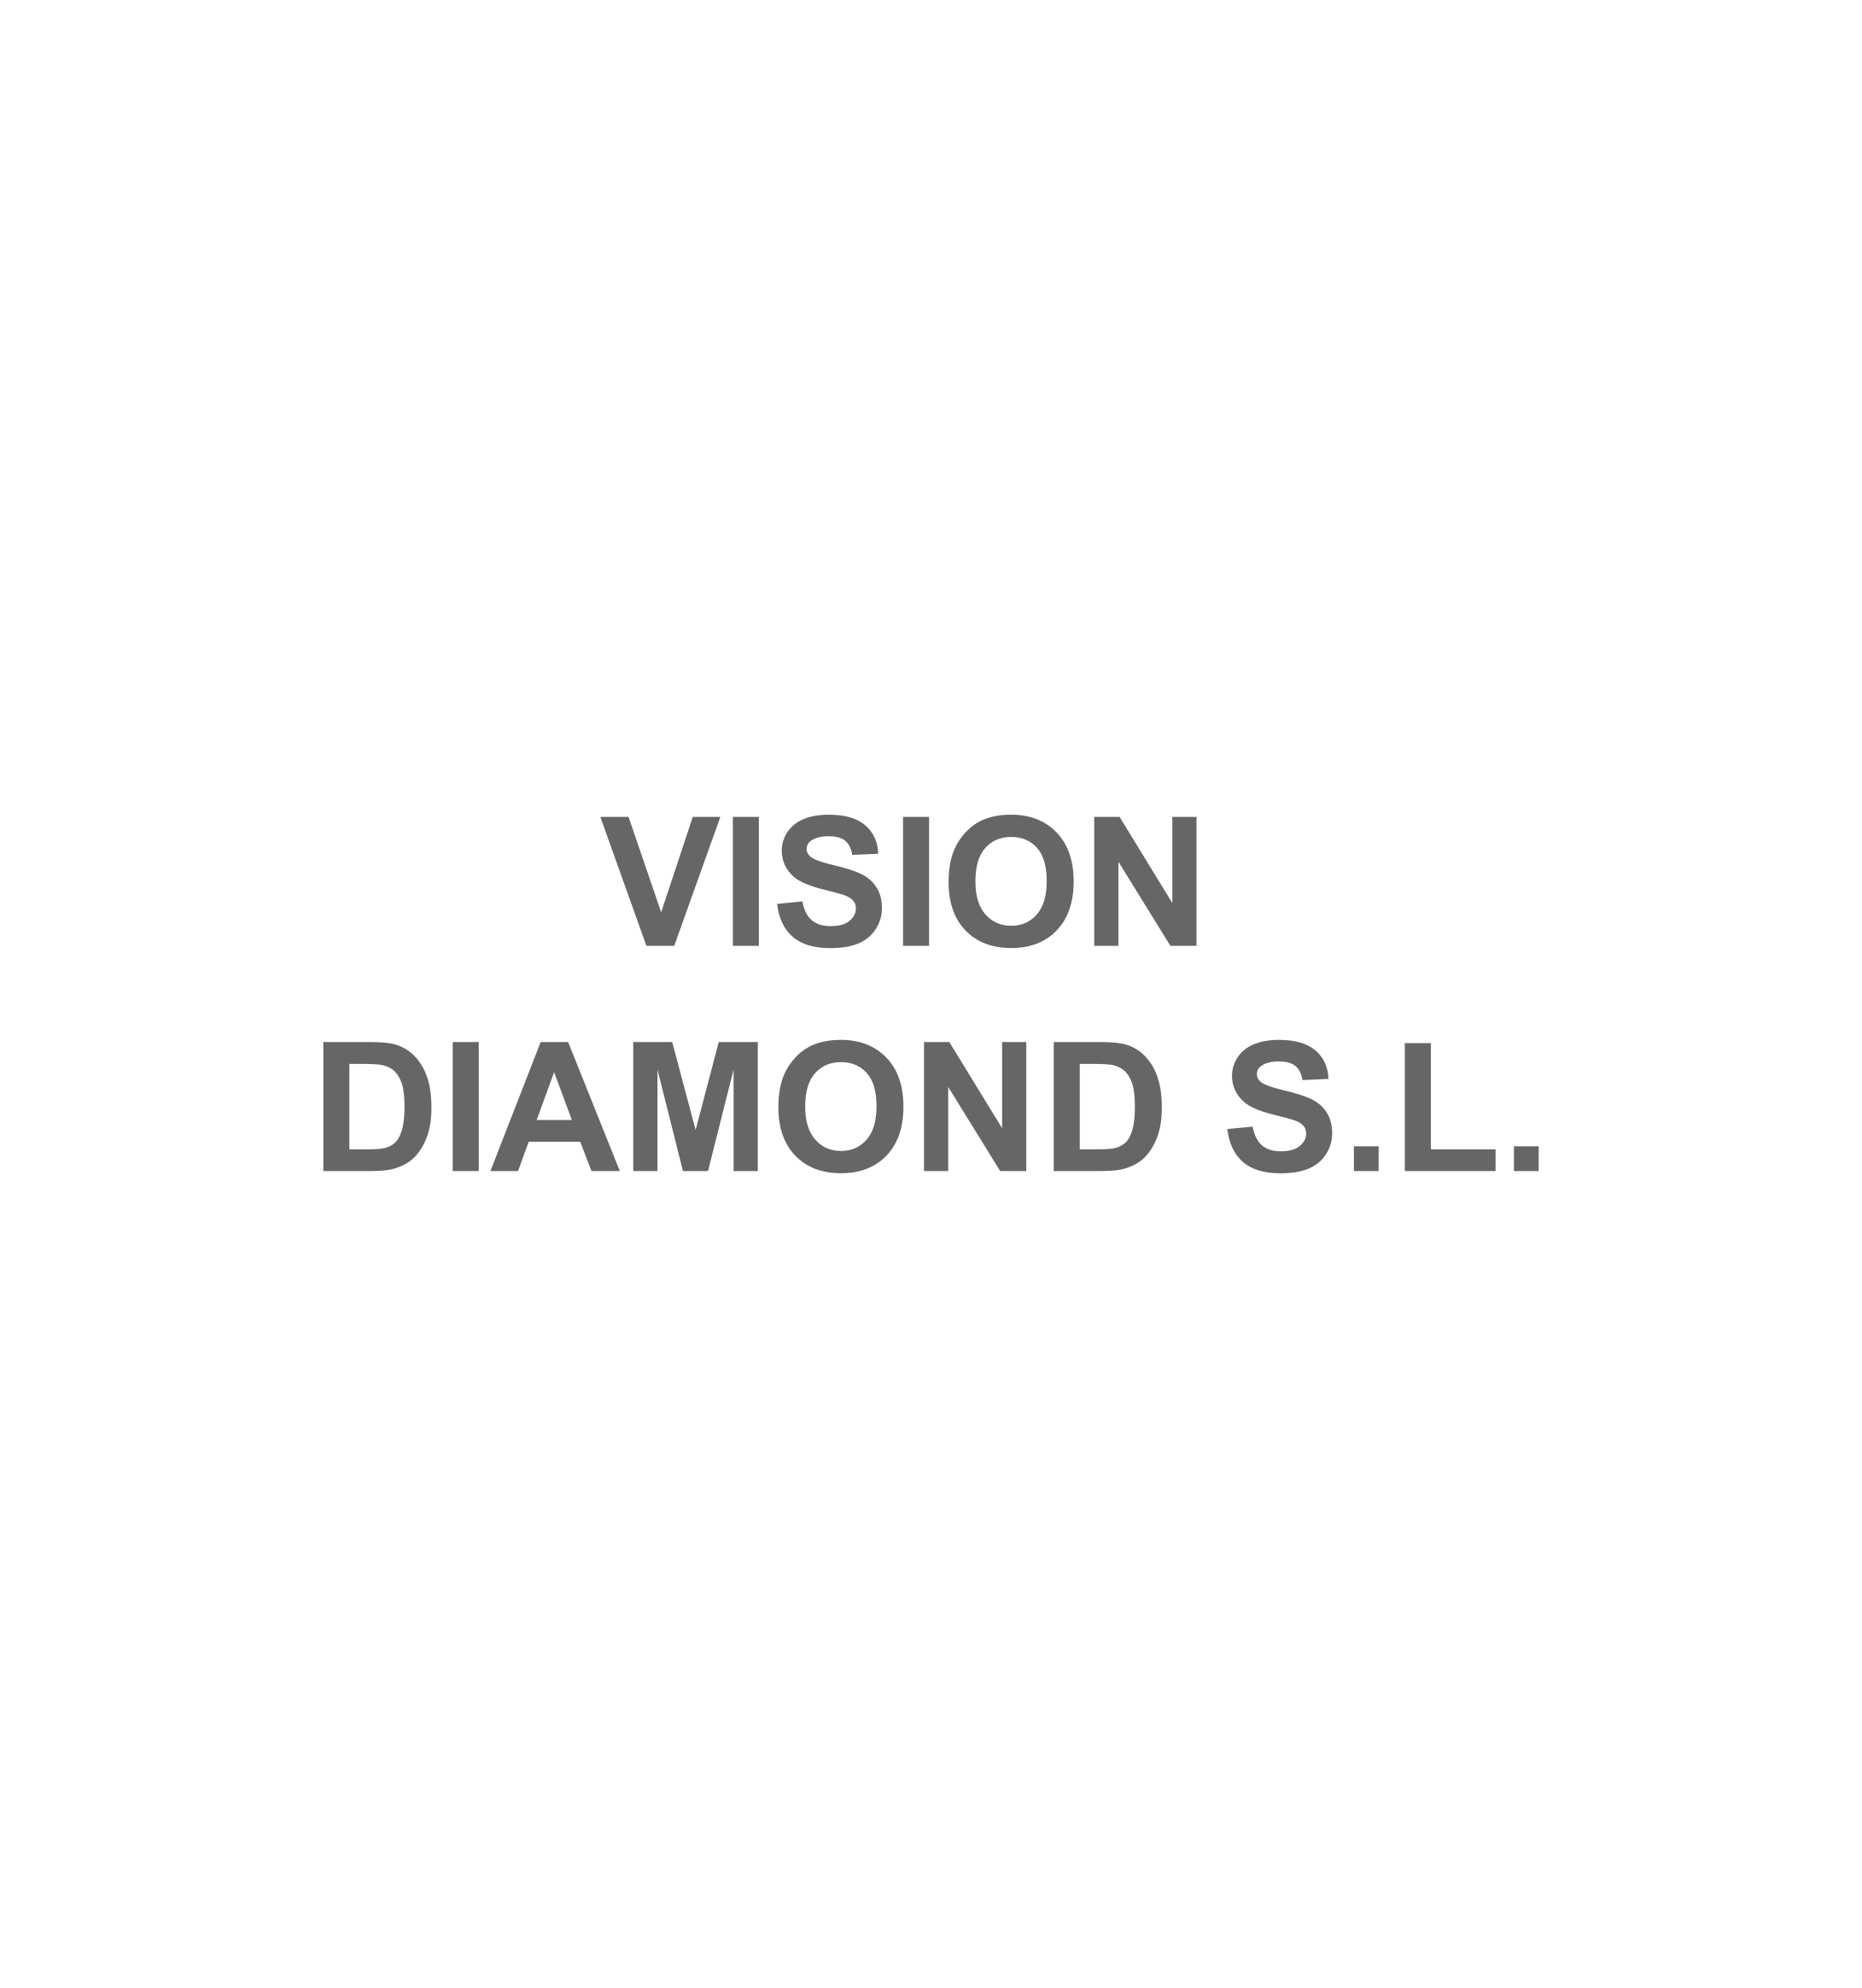 VISION DIAMOND S.L.